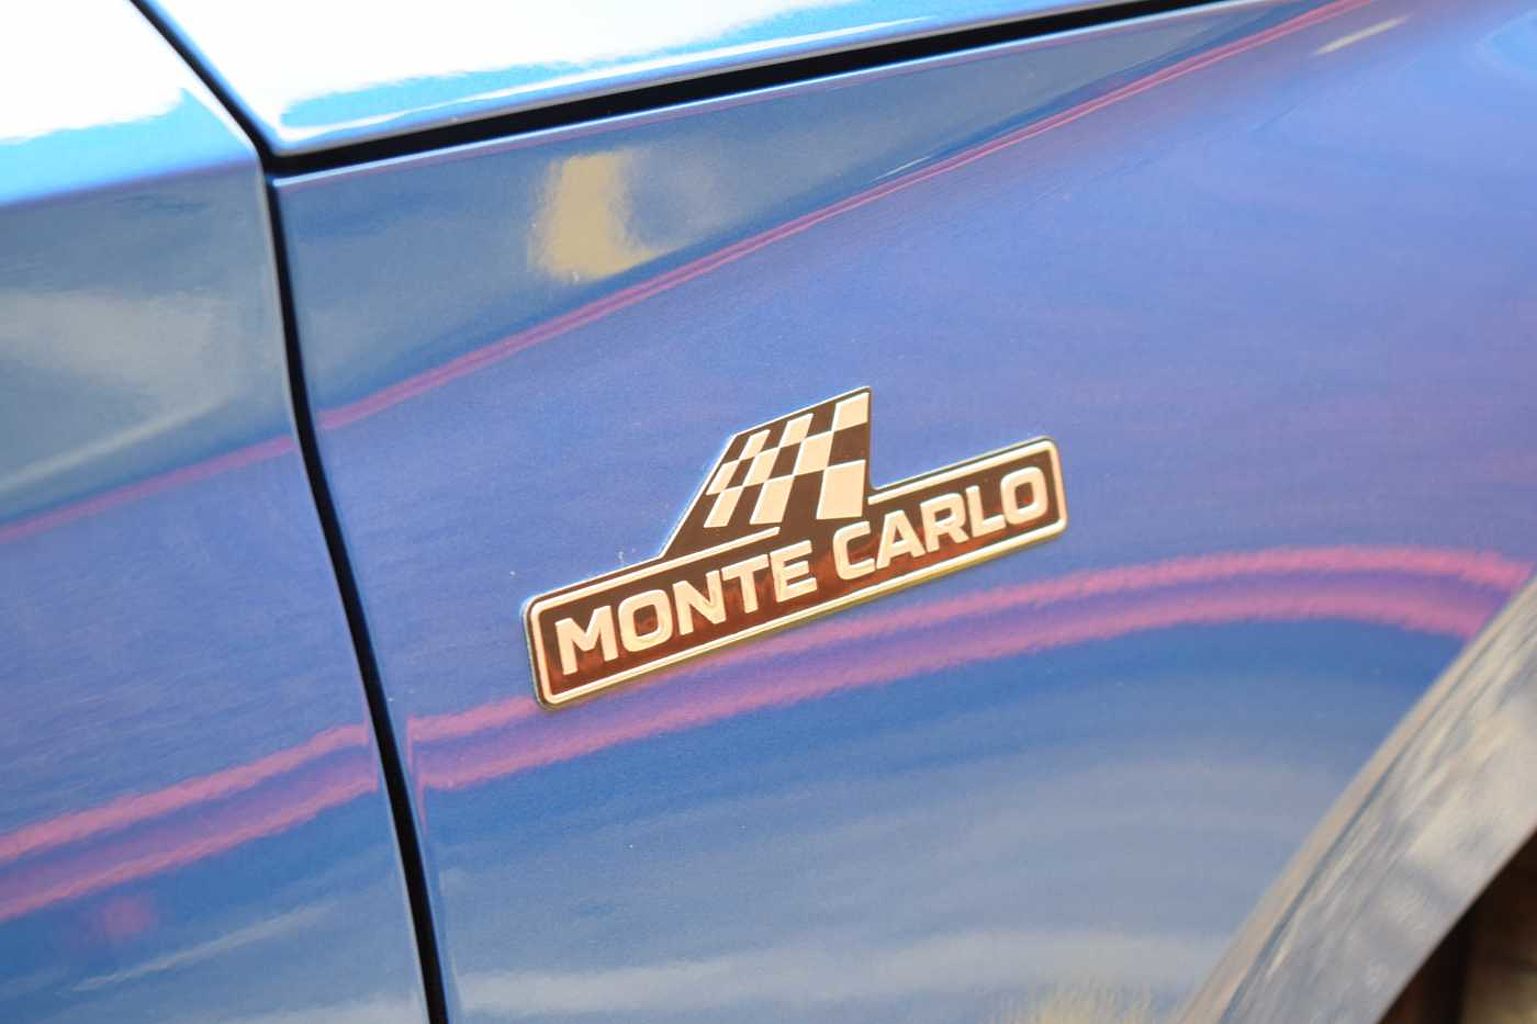 SKODA Kamiq 1.0 TSI (110ps) Monte Carlo SUV